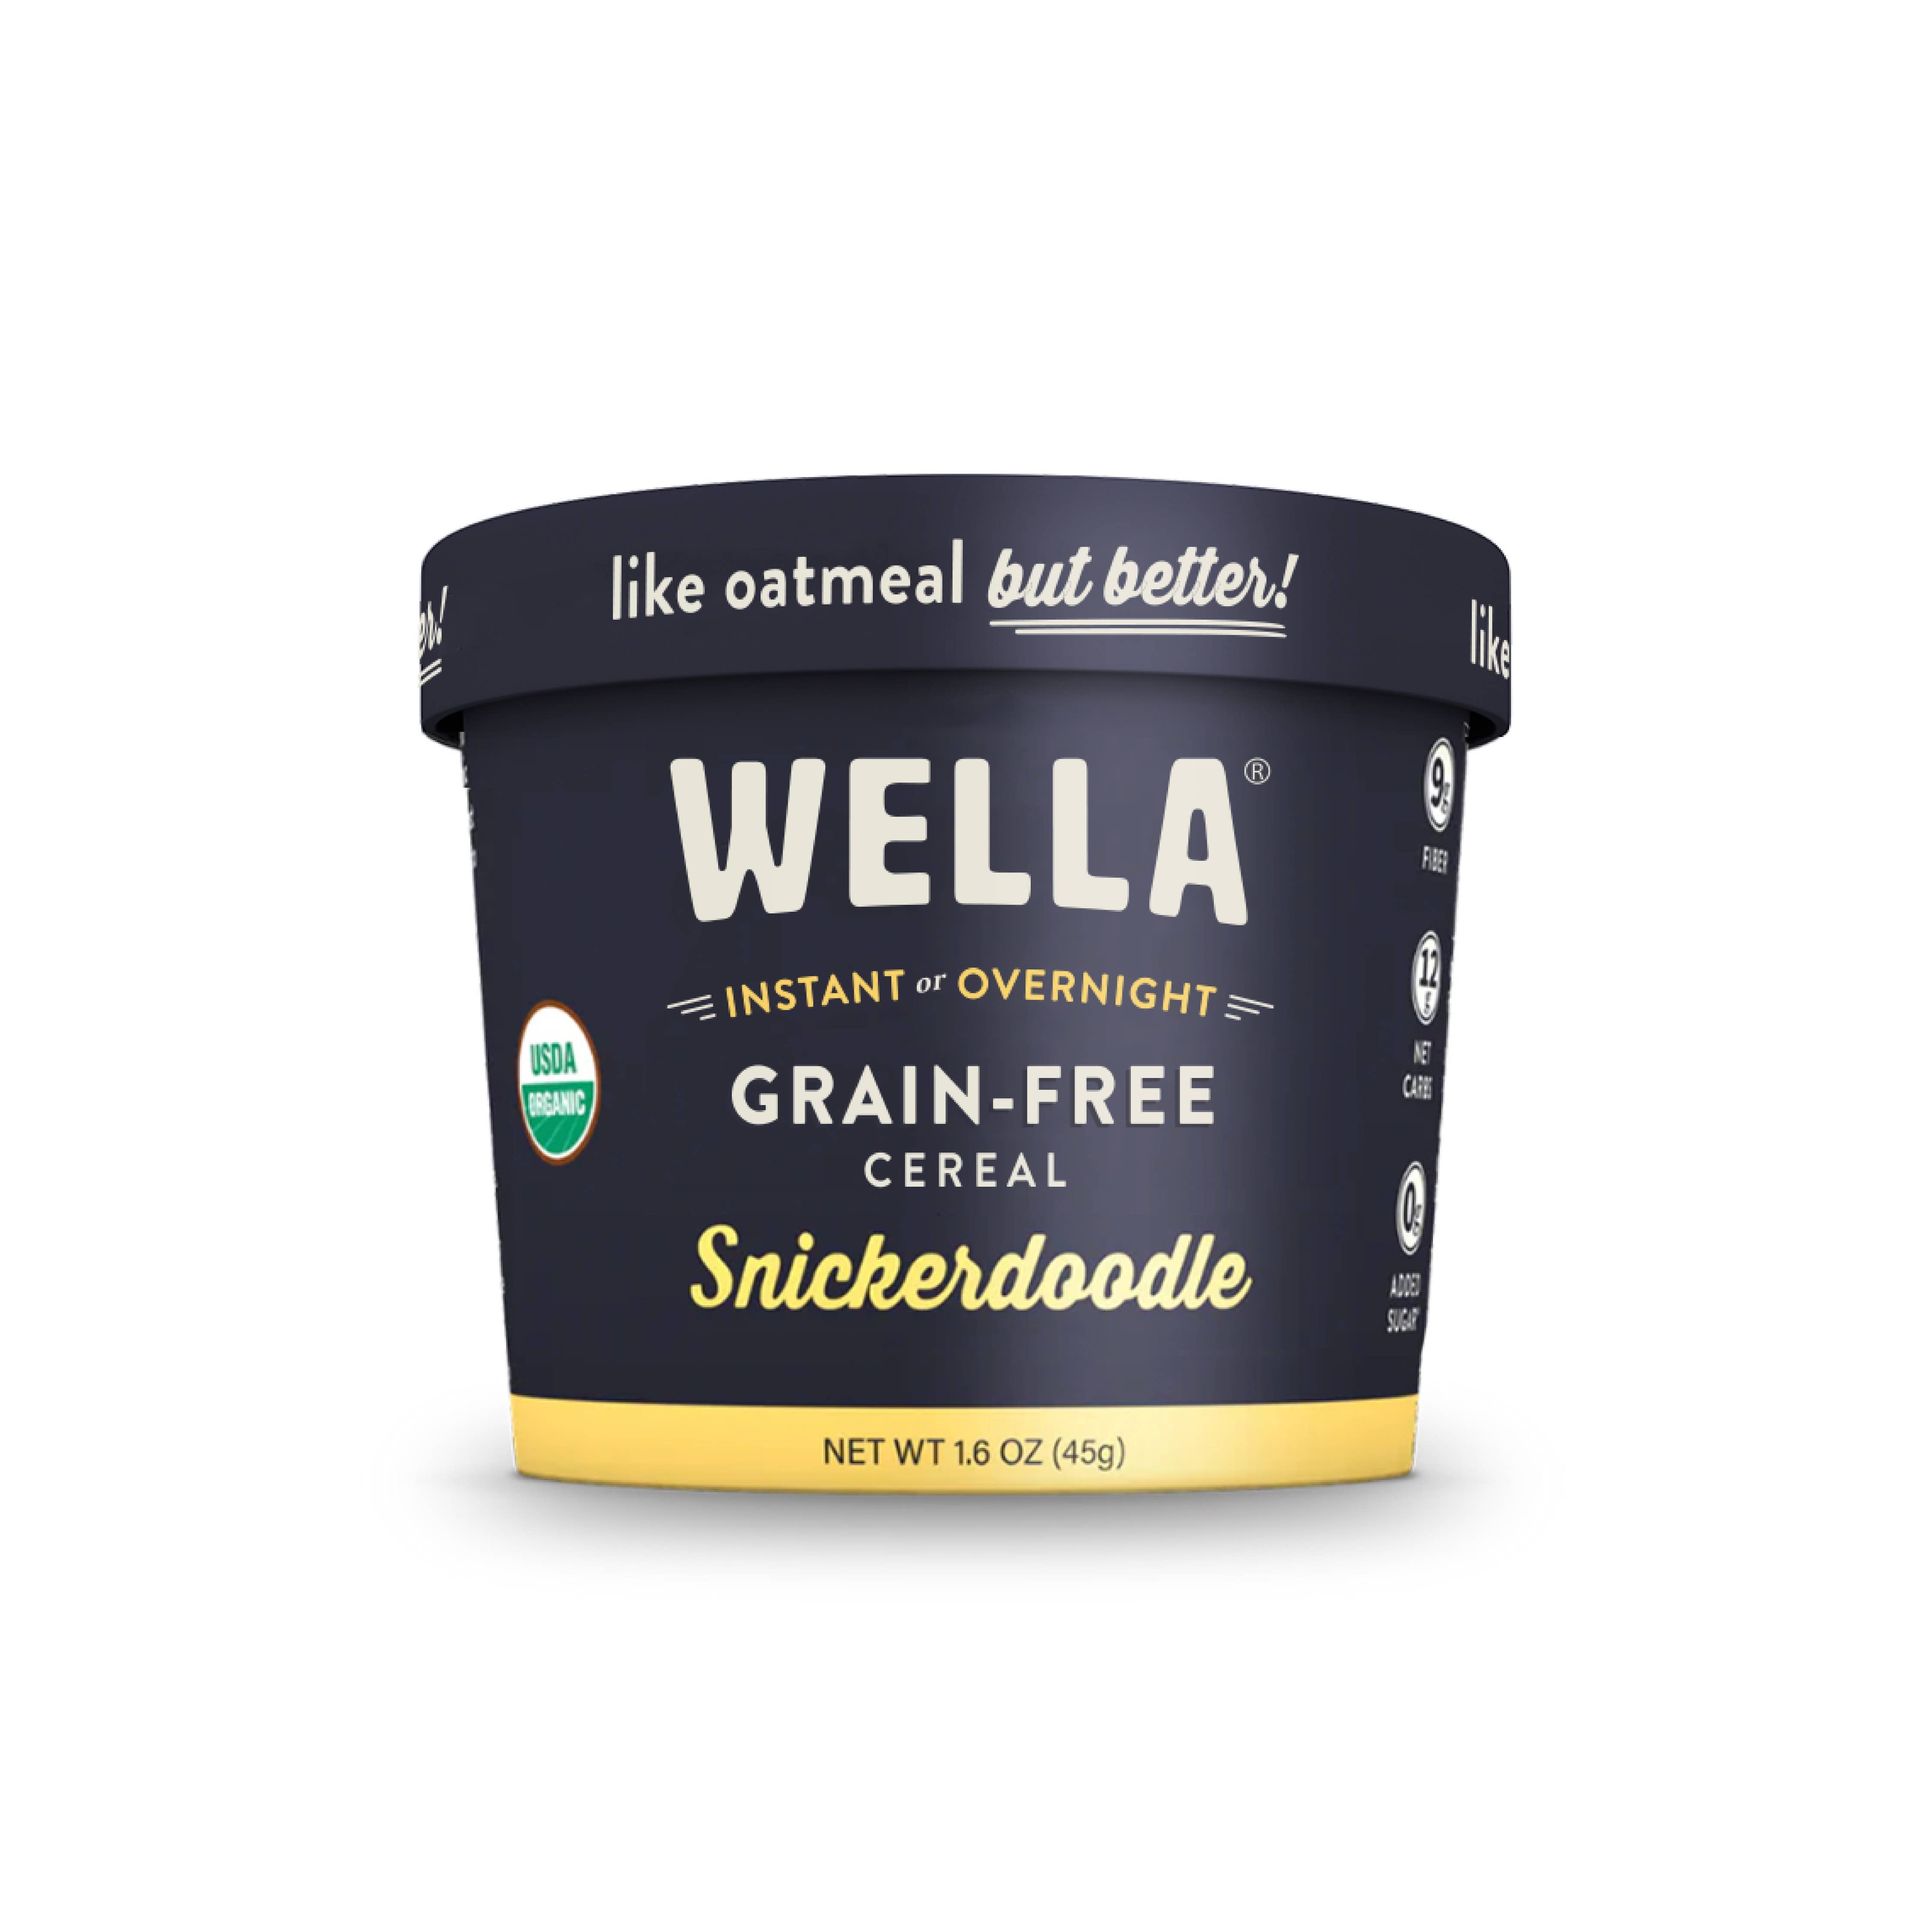 Wella Grain-Free Cereal Snickerdoodle Cup-1